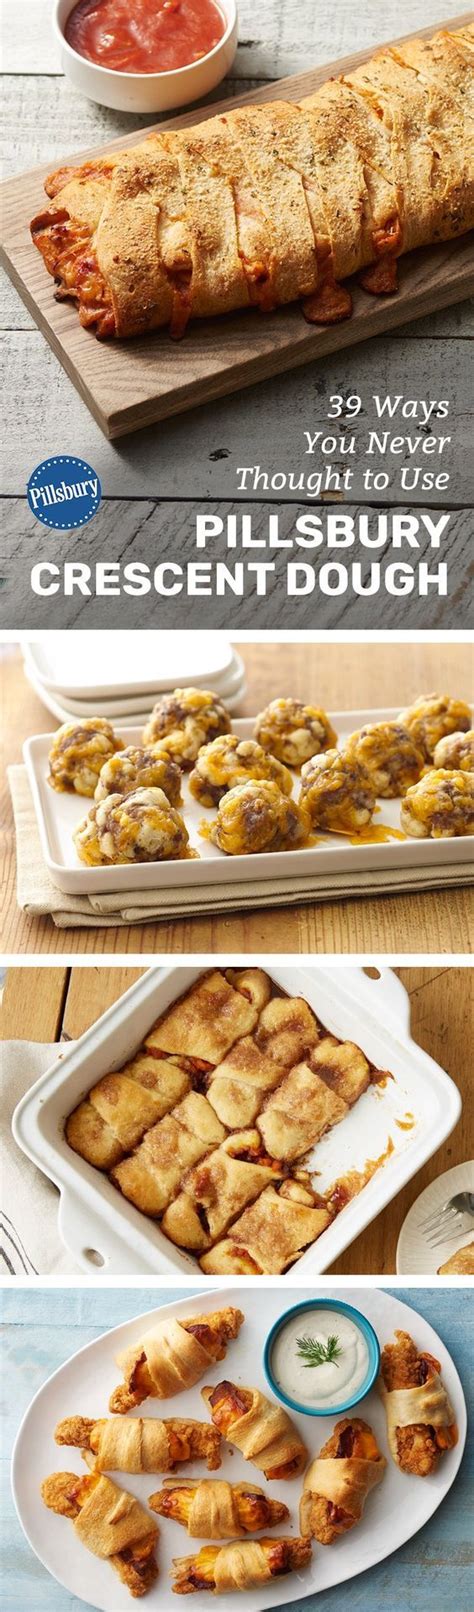 ways   thought   pillsbury crescent dough pilsbury recipes friendsgiving food